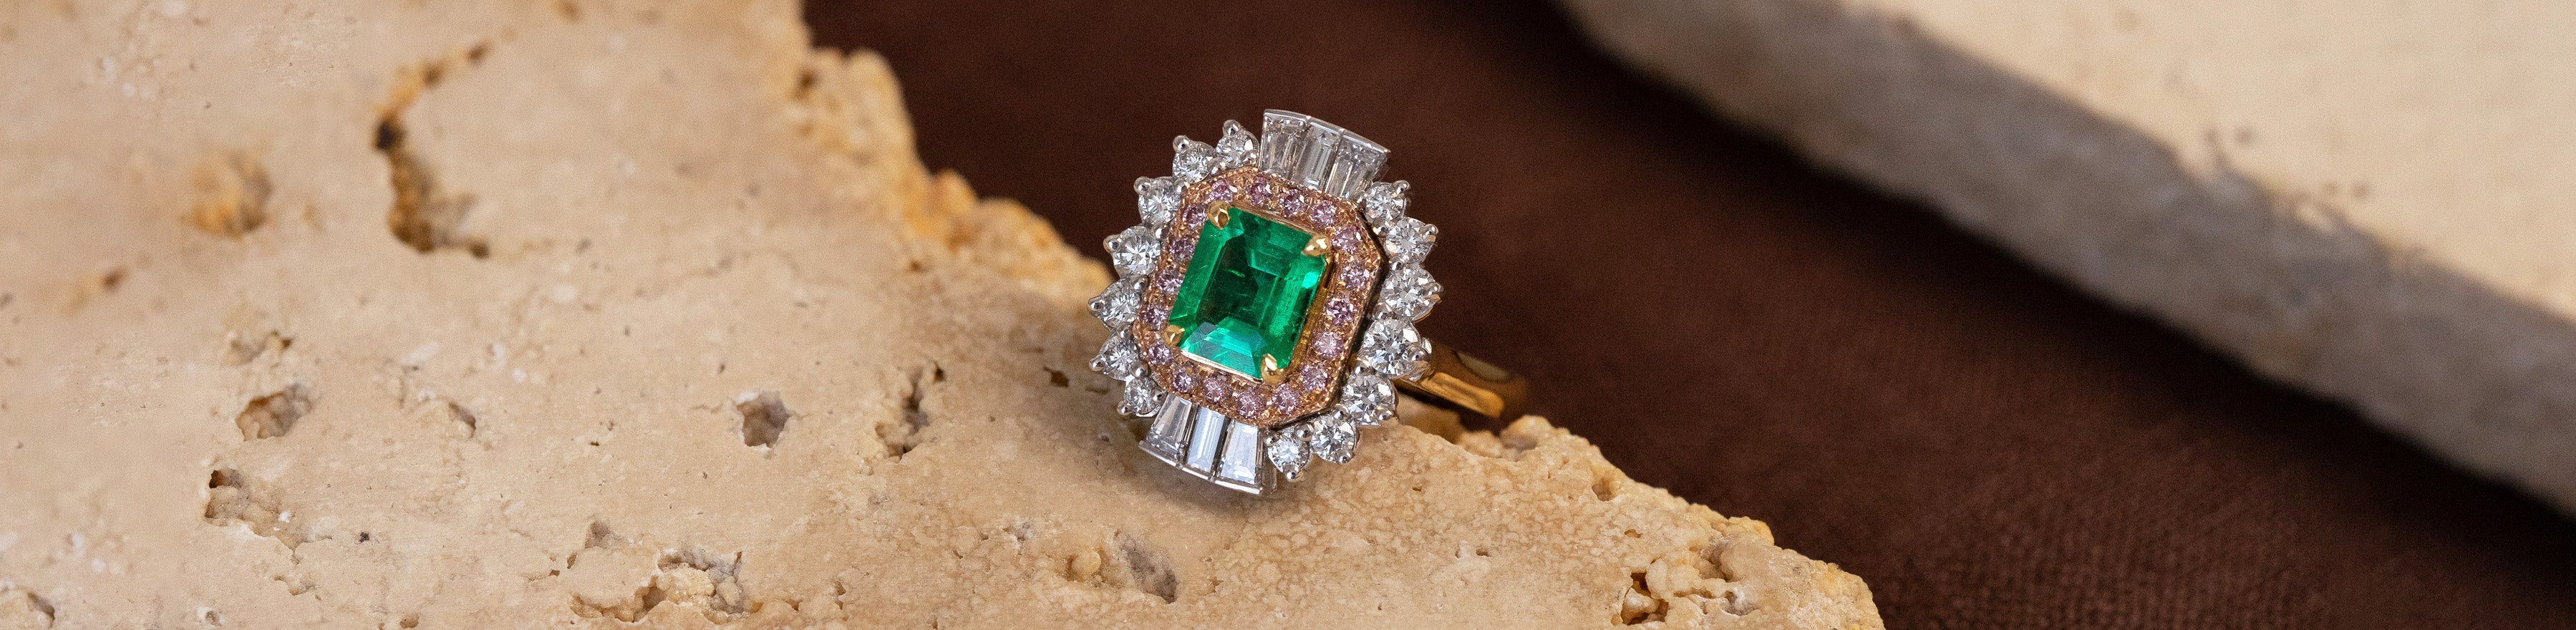 Precious Gemstone: Emerald